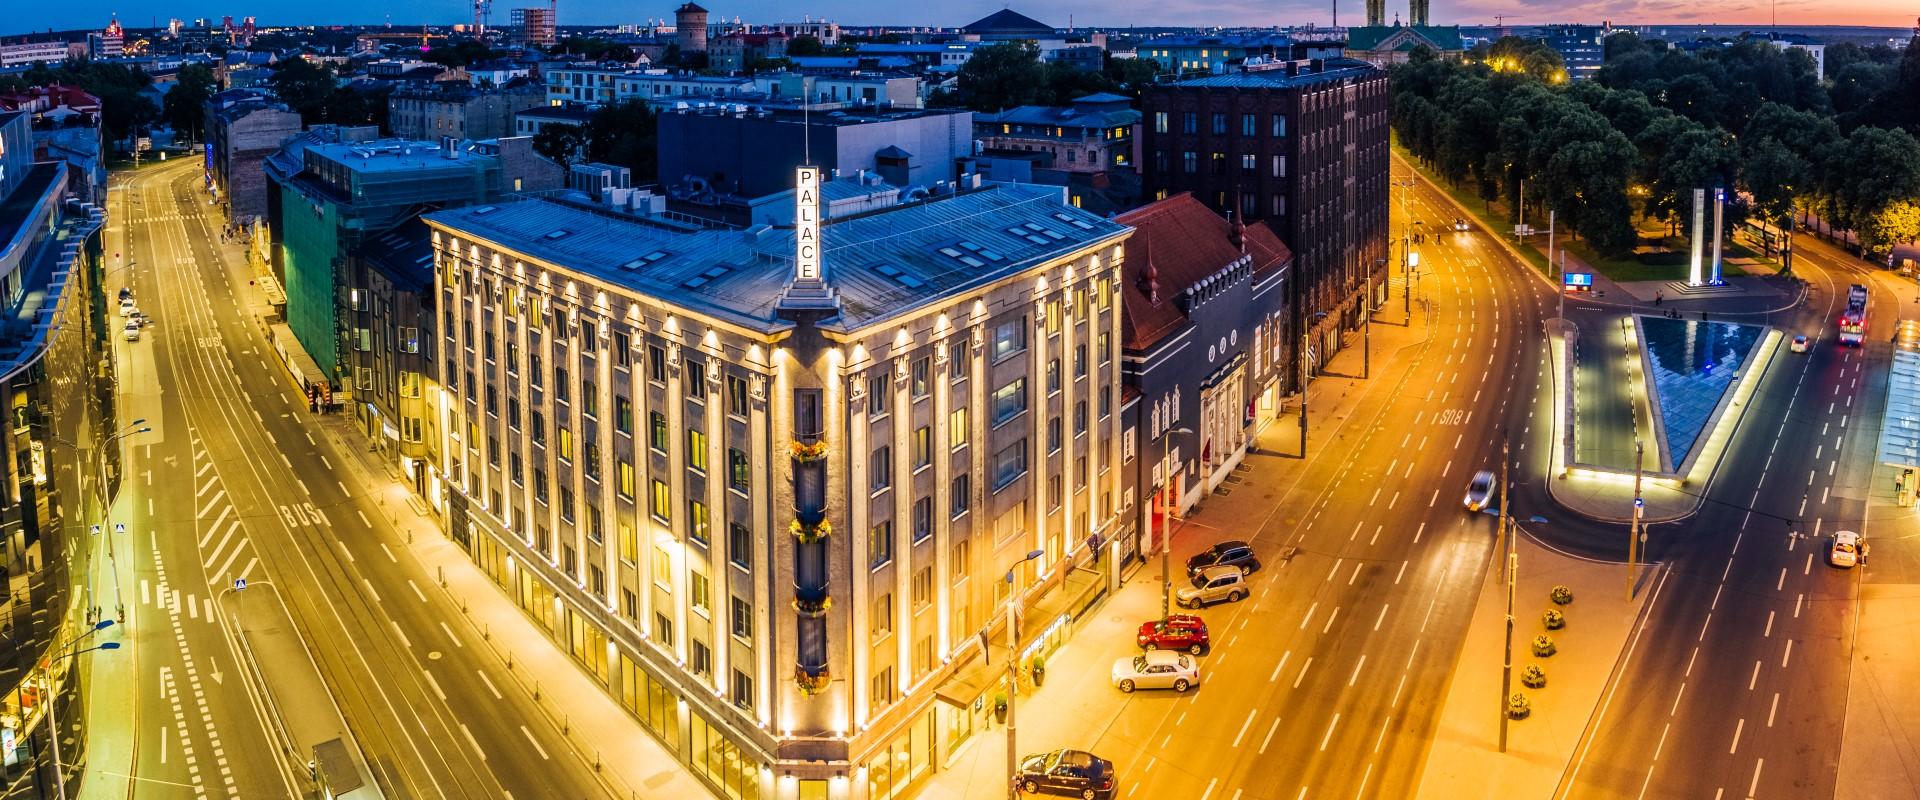 Palace Hotel Tallinn, a member of Radisson Individuals